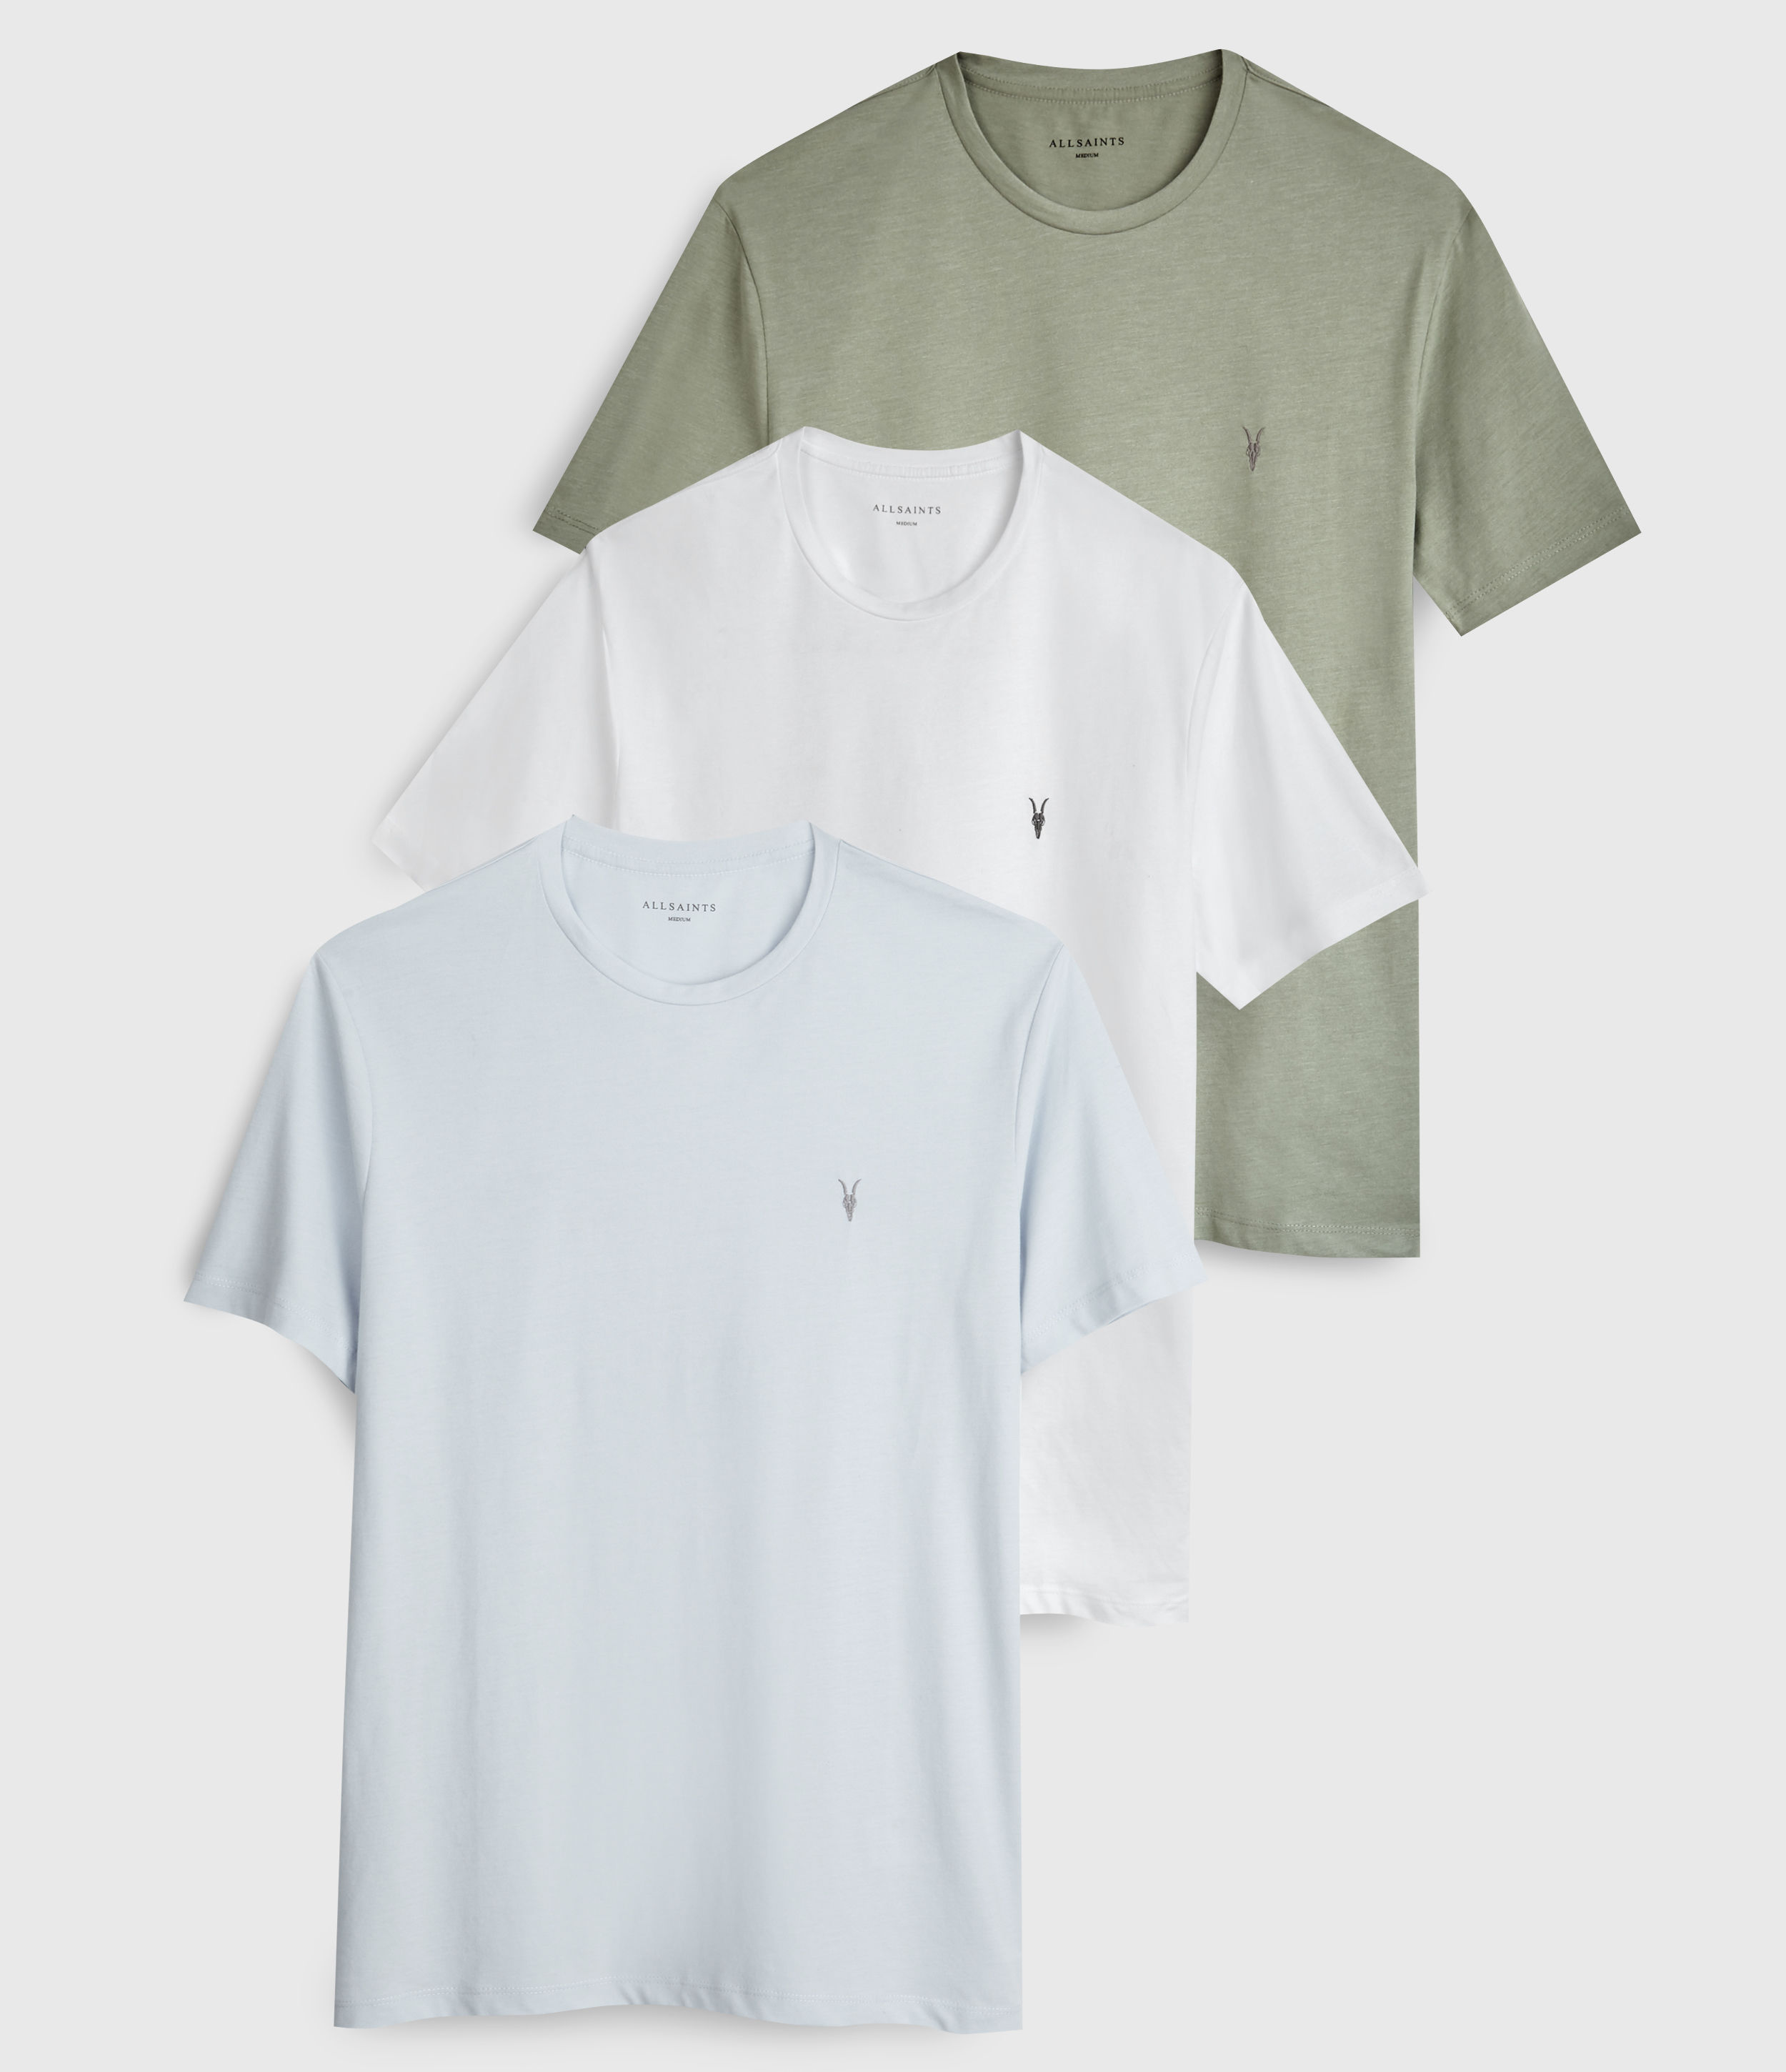 Allsaints Men's Brace Tonic 3 Pack T-shirts In Green/white/blue